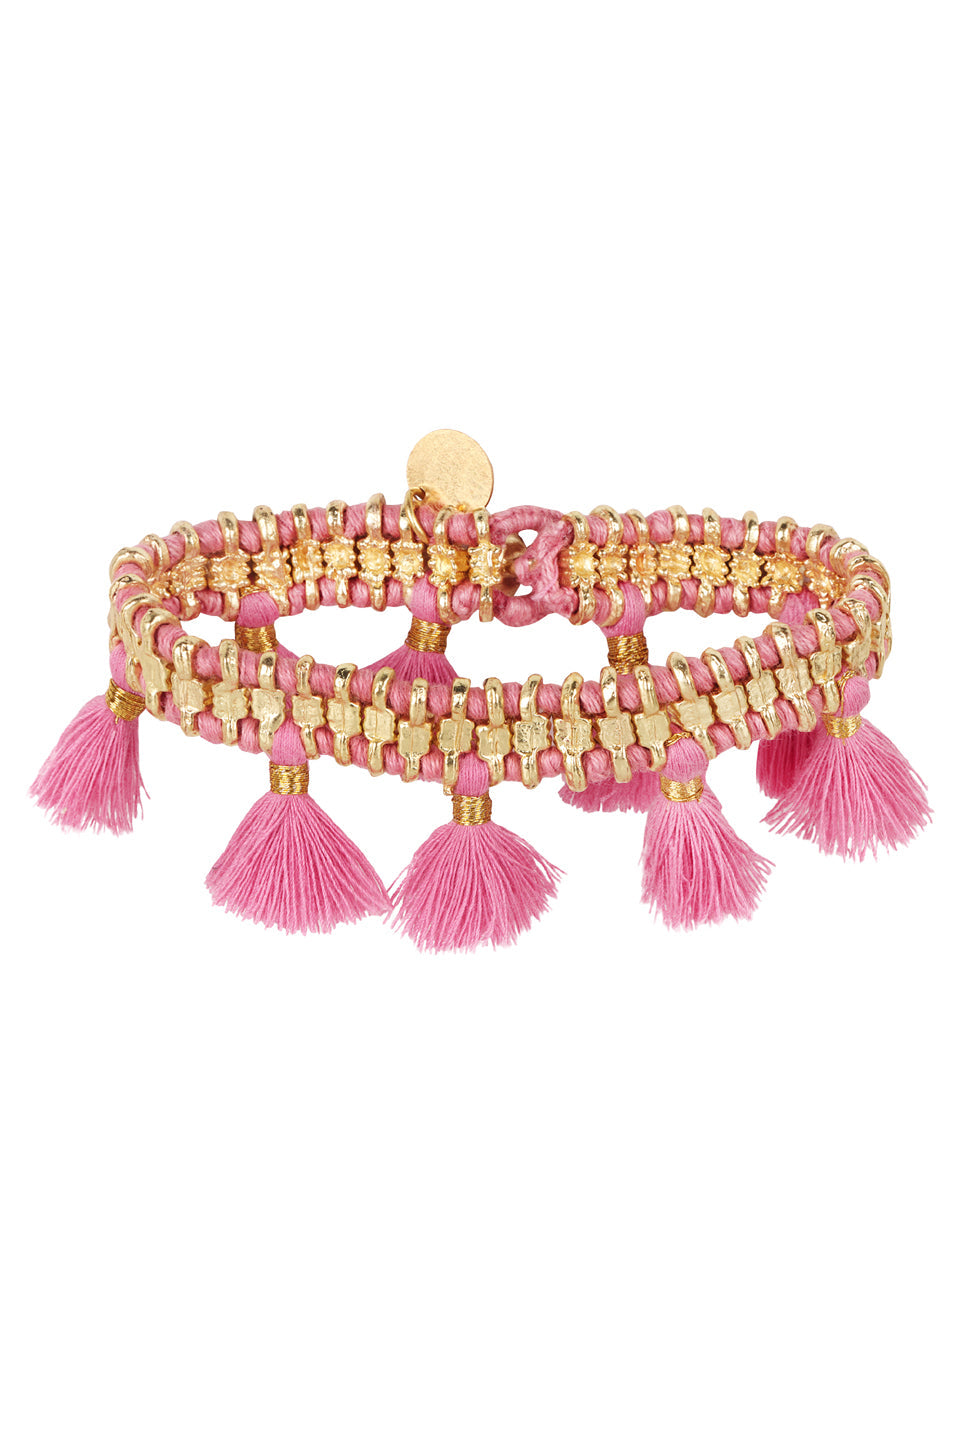 Jaipur Pink Flamingo Tassel Bracelet